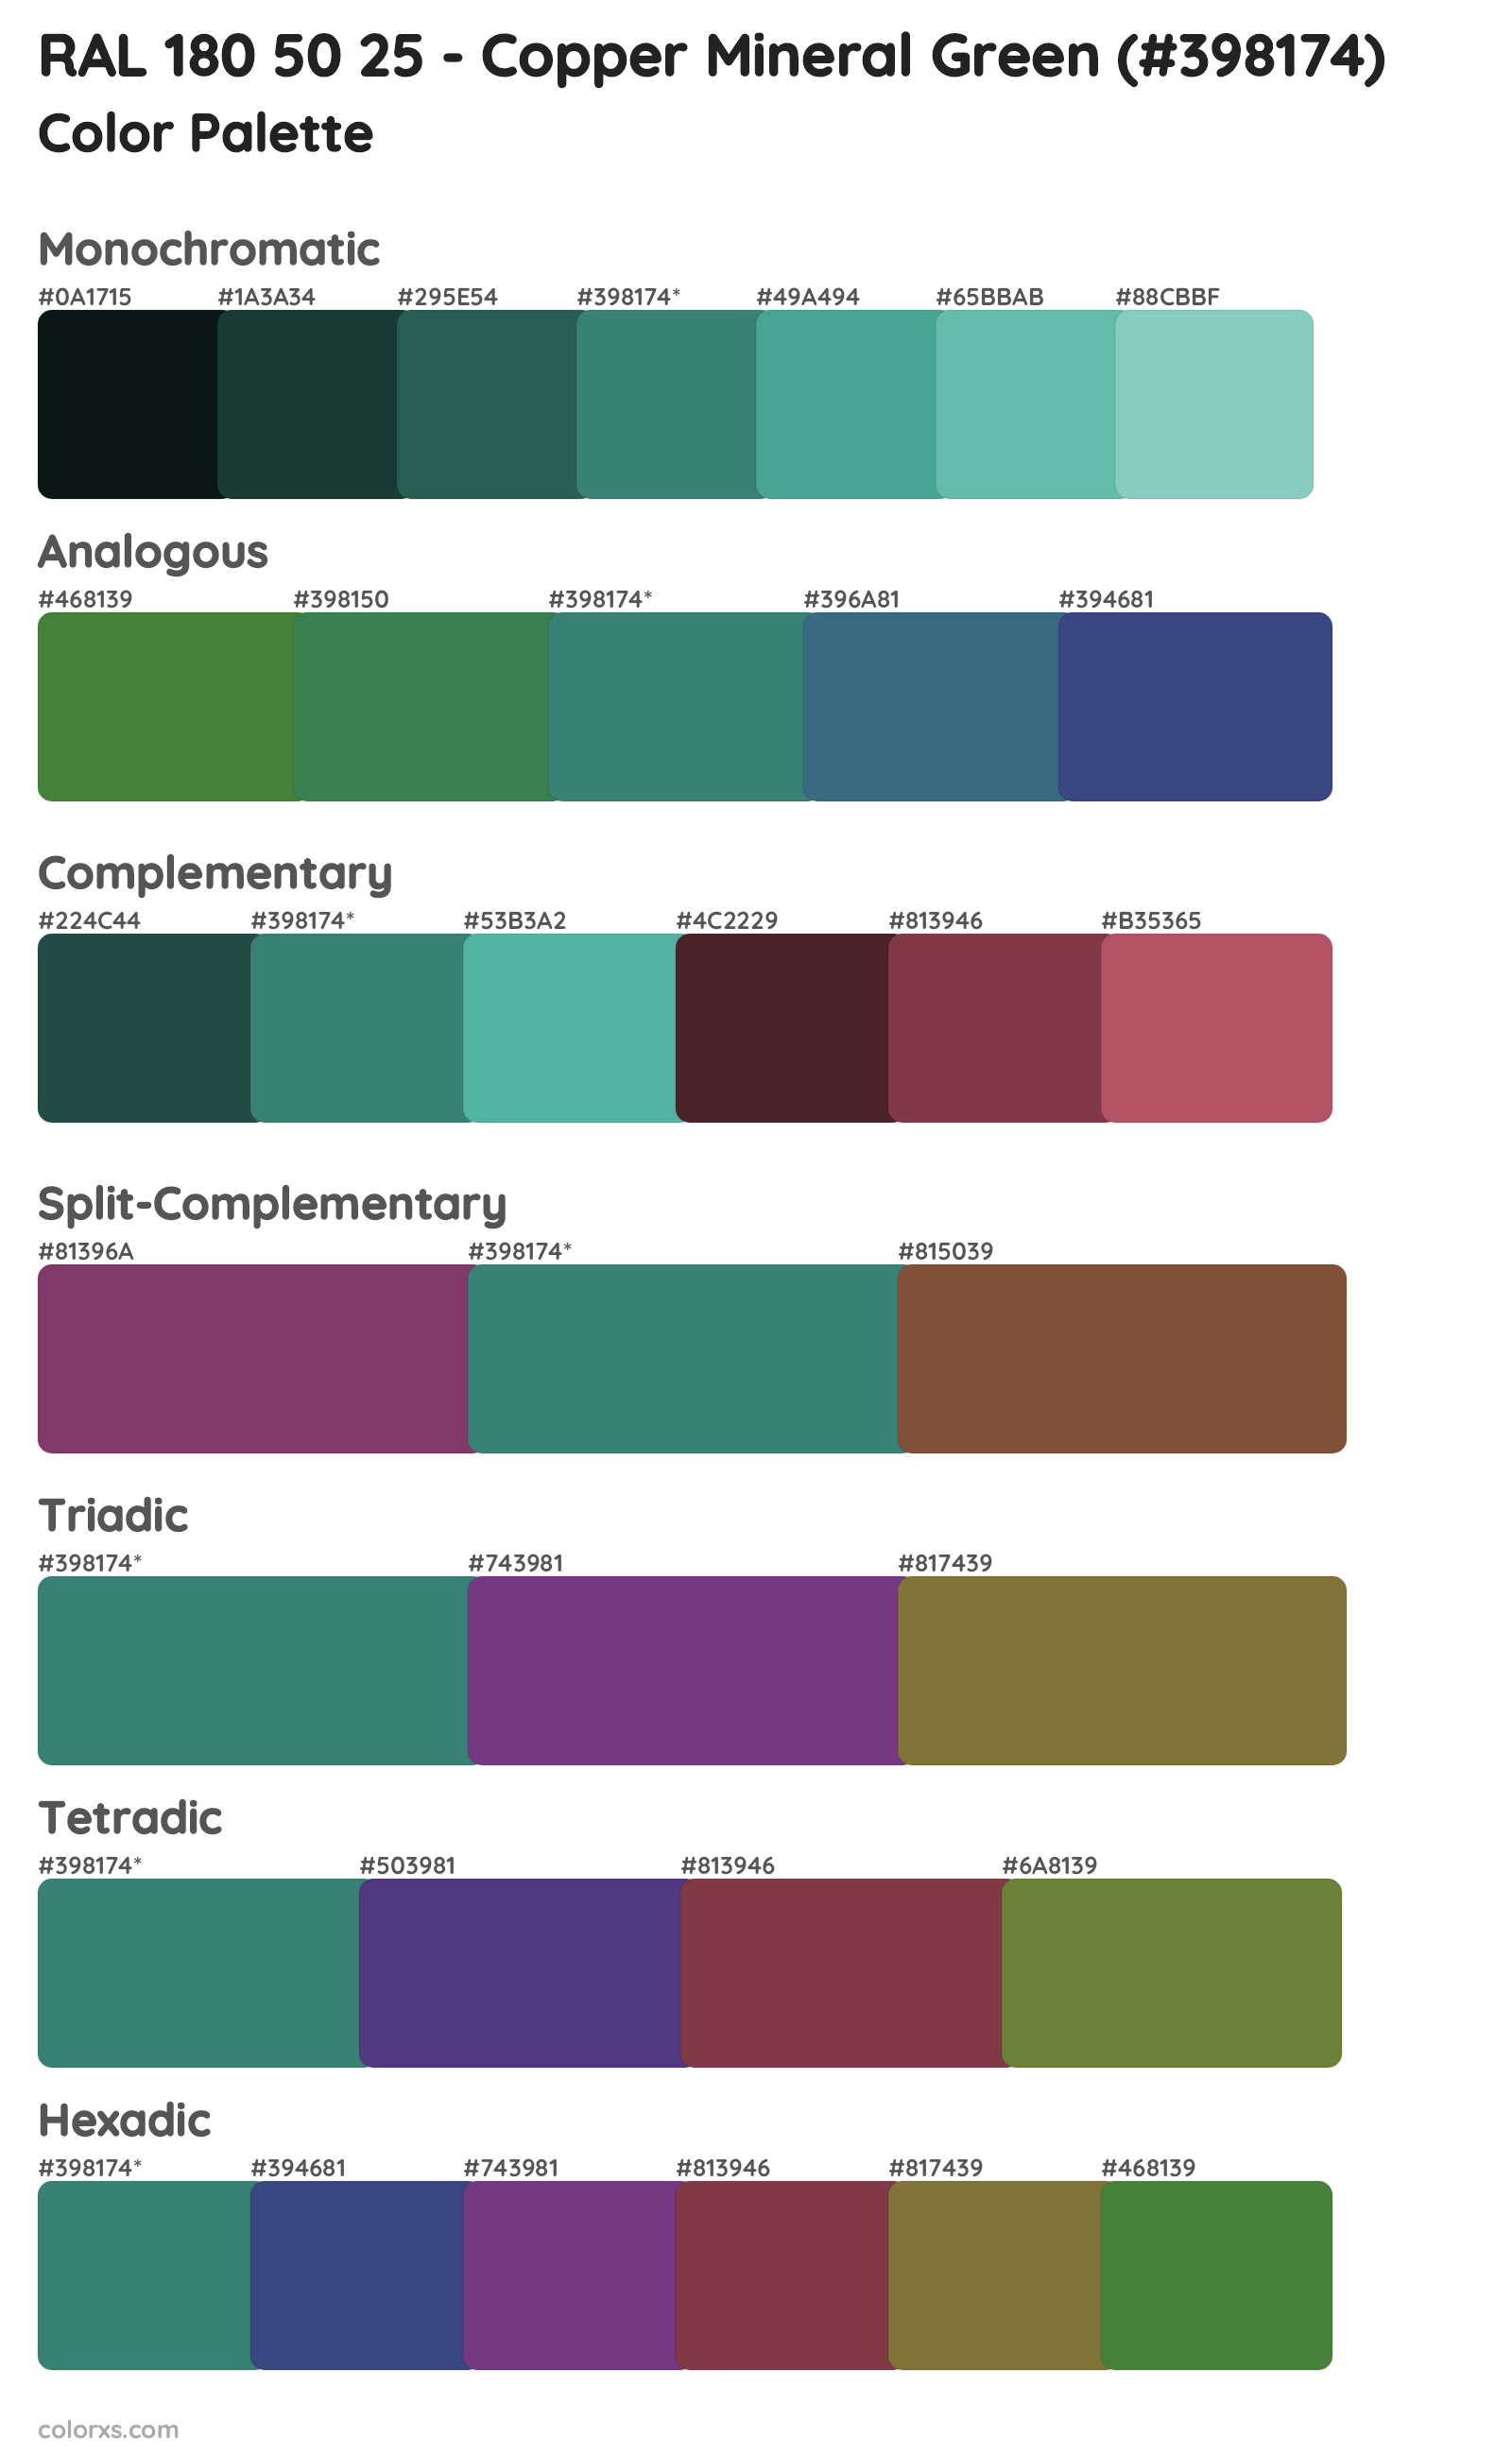 RAL 180 50 25 - Copper Mineral Green Color Scheme Palettes